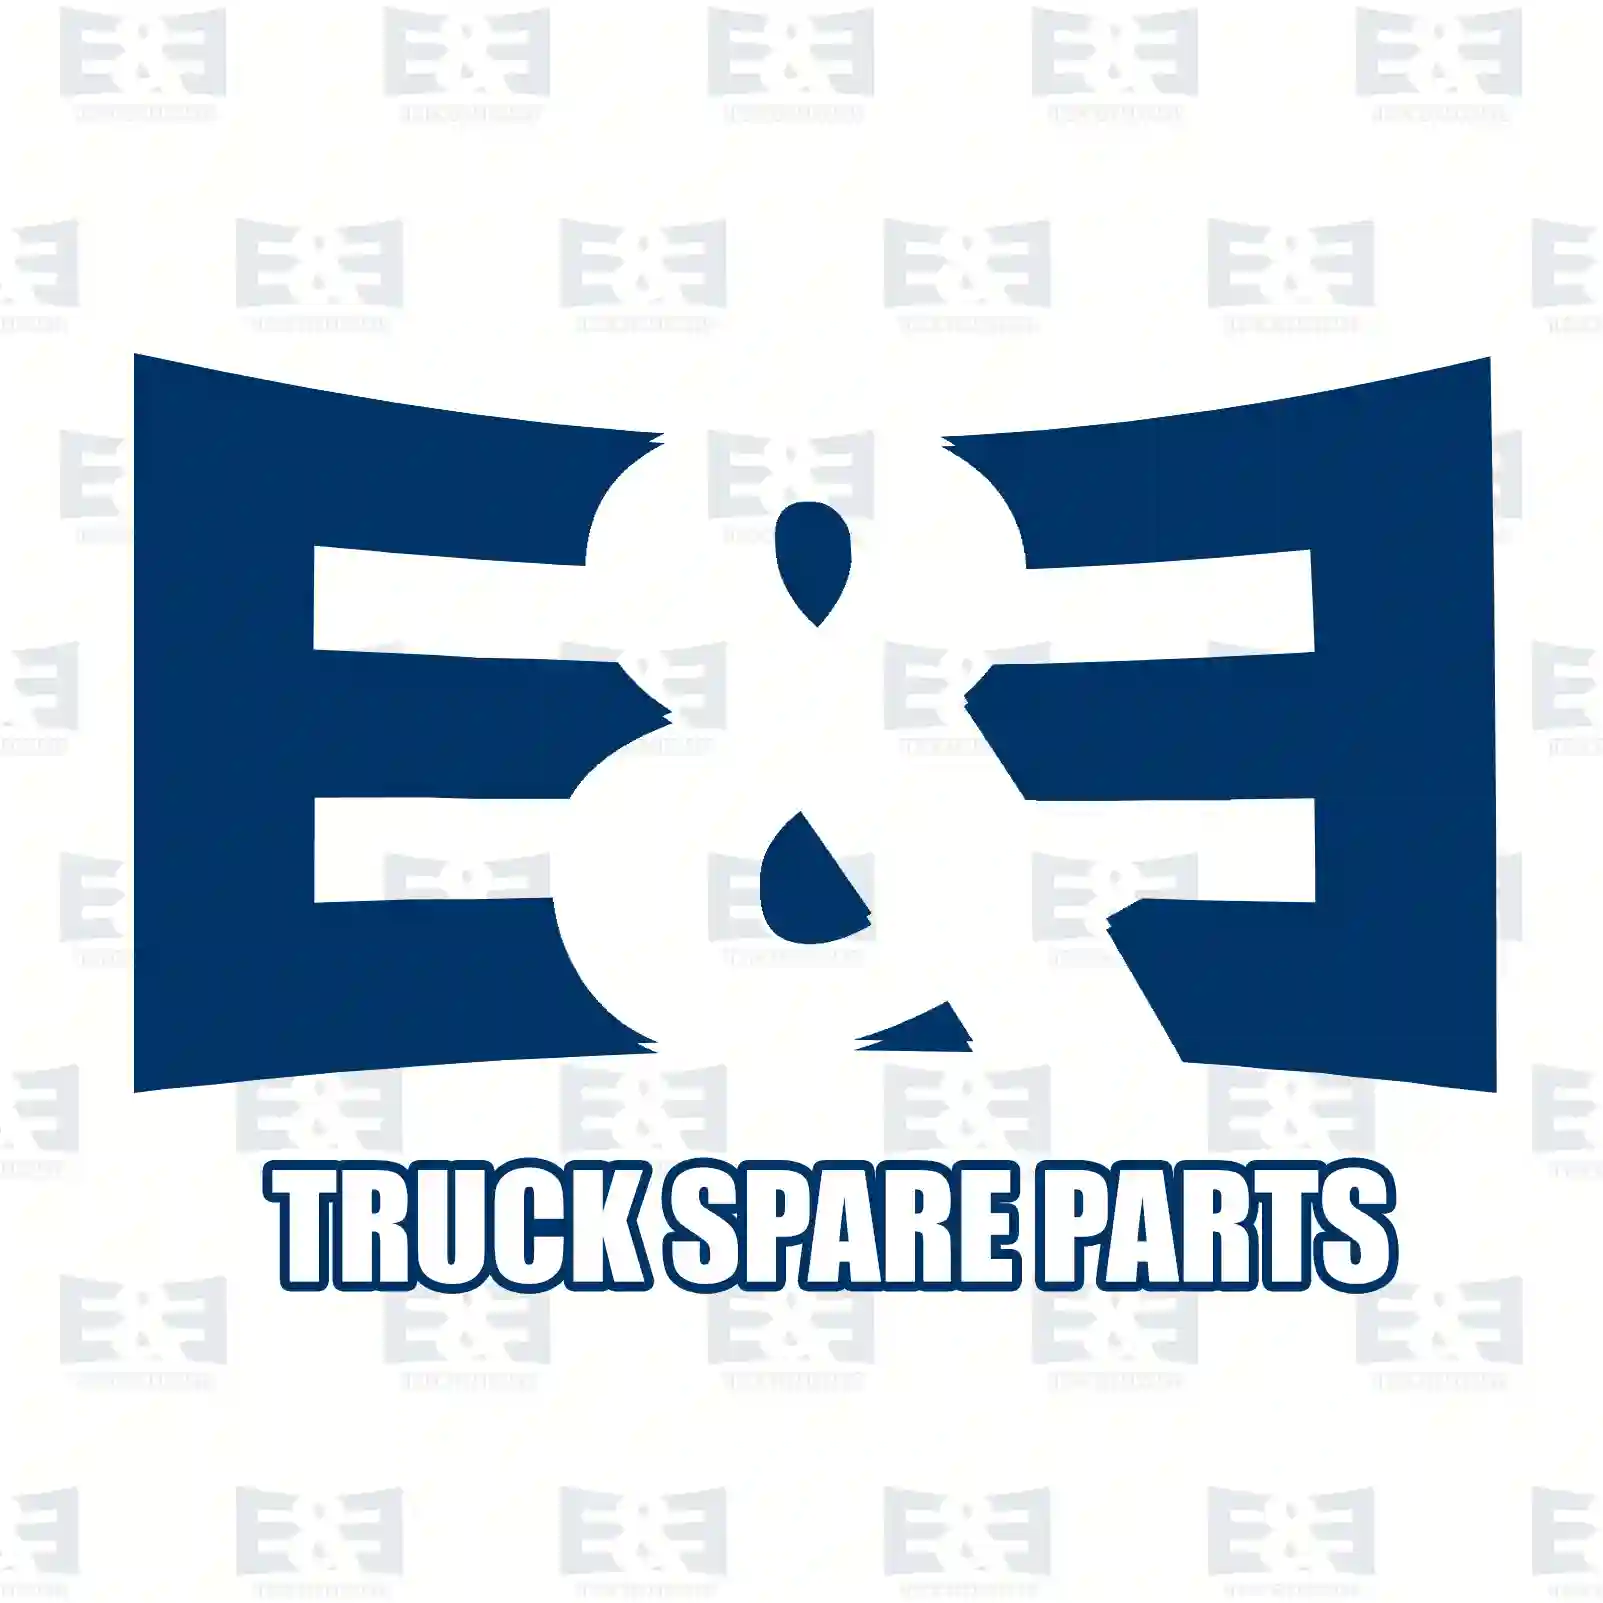 Control Arm Control arm, EE No 2E2270766 ,  oem no:0003300807, 0003301107, 6283300307, 6283300407, 6293301407 E&E Truck Spare Parts | Truck Spare Parts, Auotomotive Spare Parts